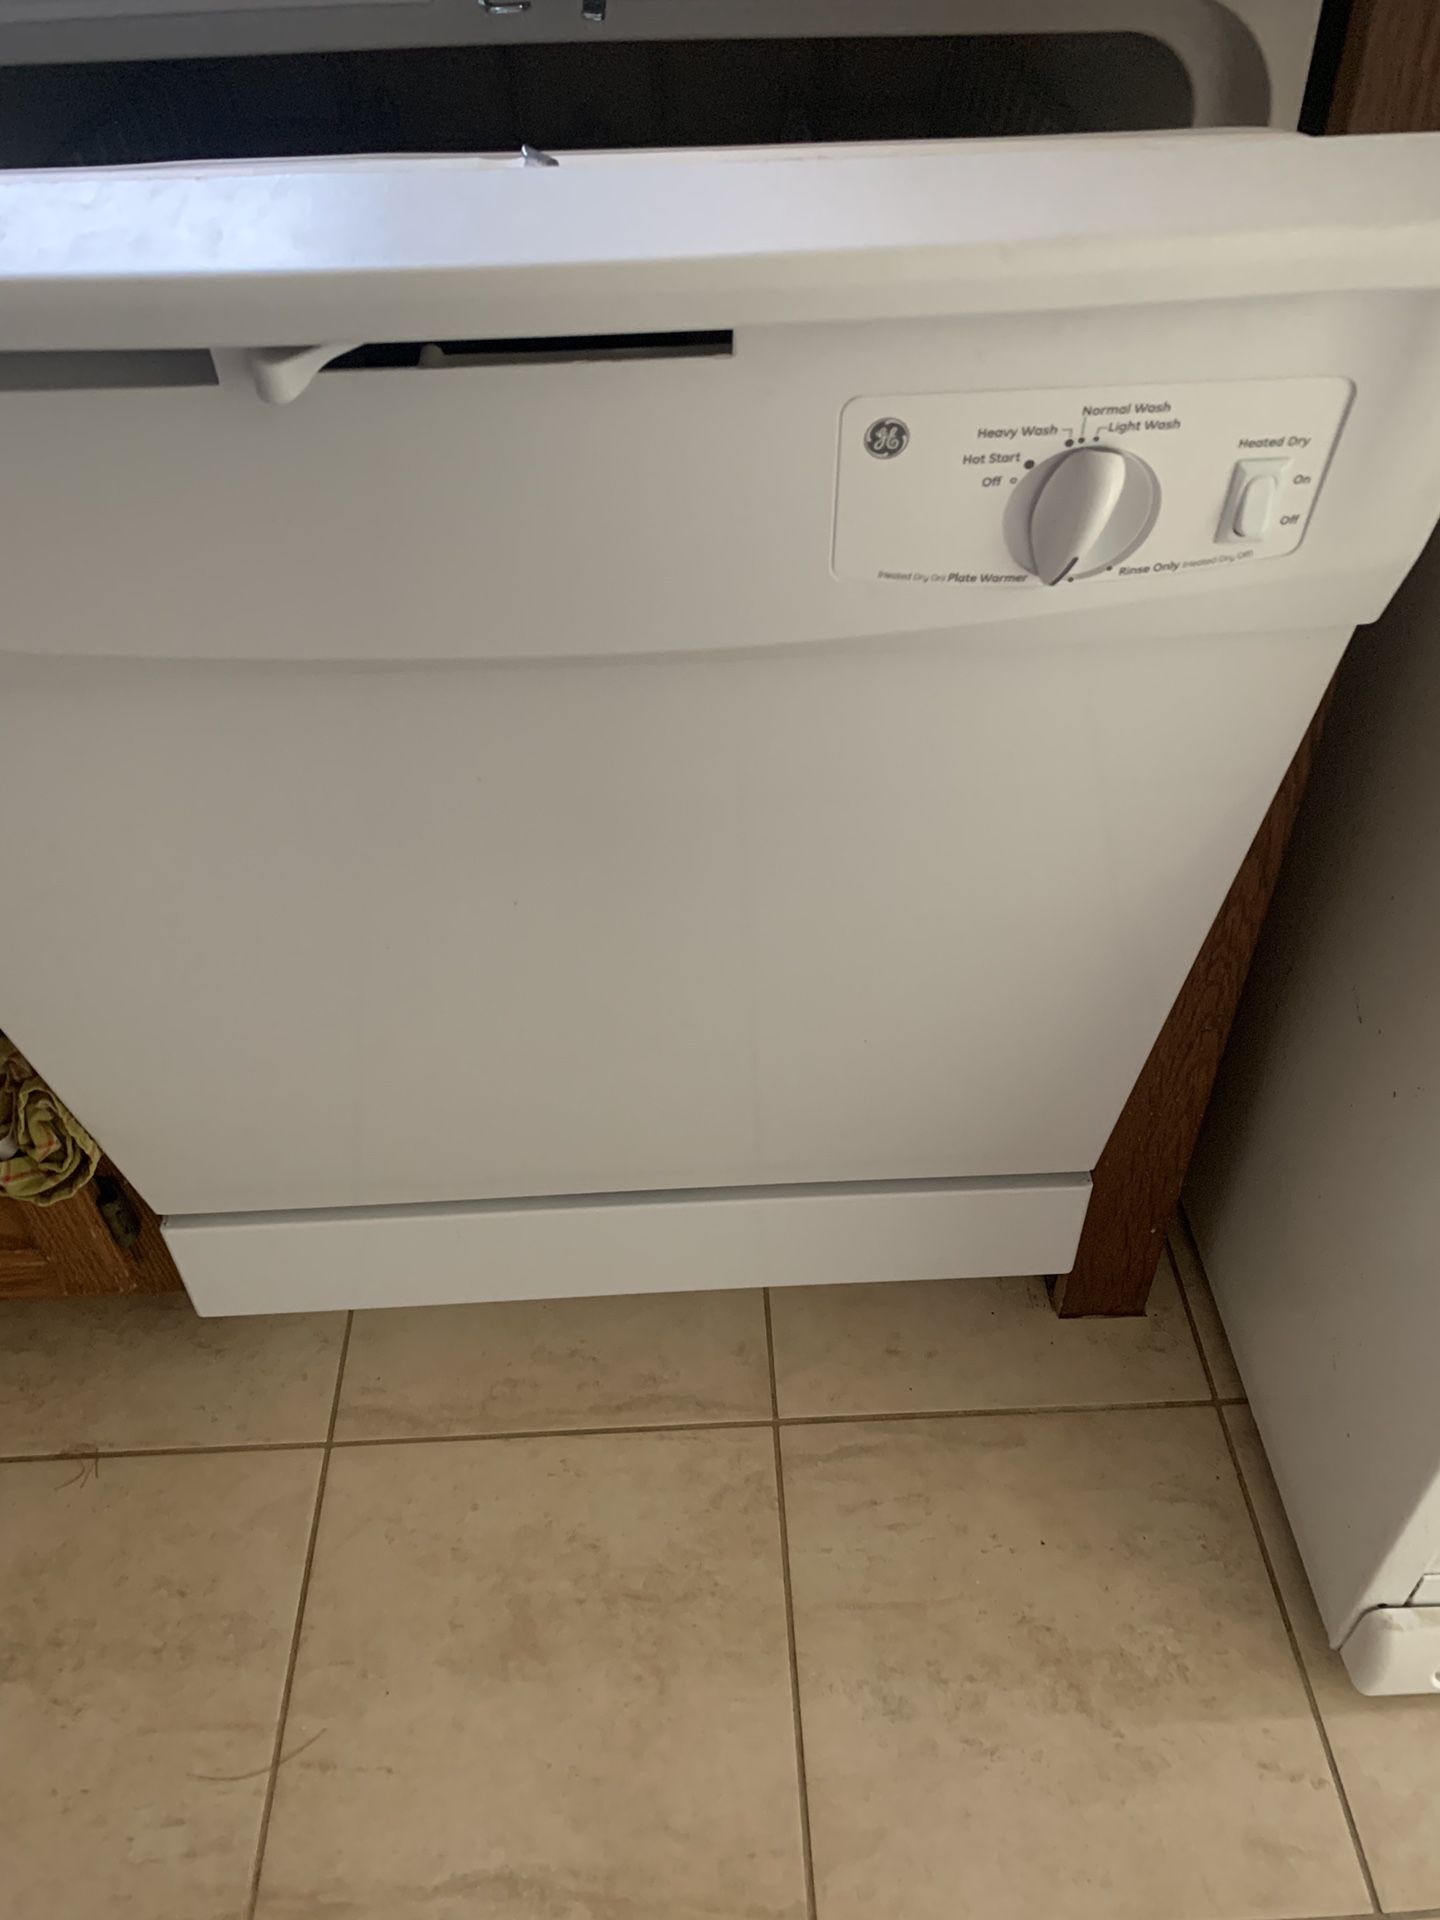 GE dishwasher 24’ width